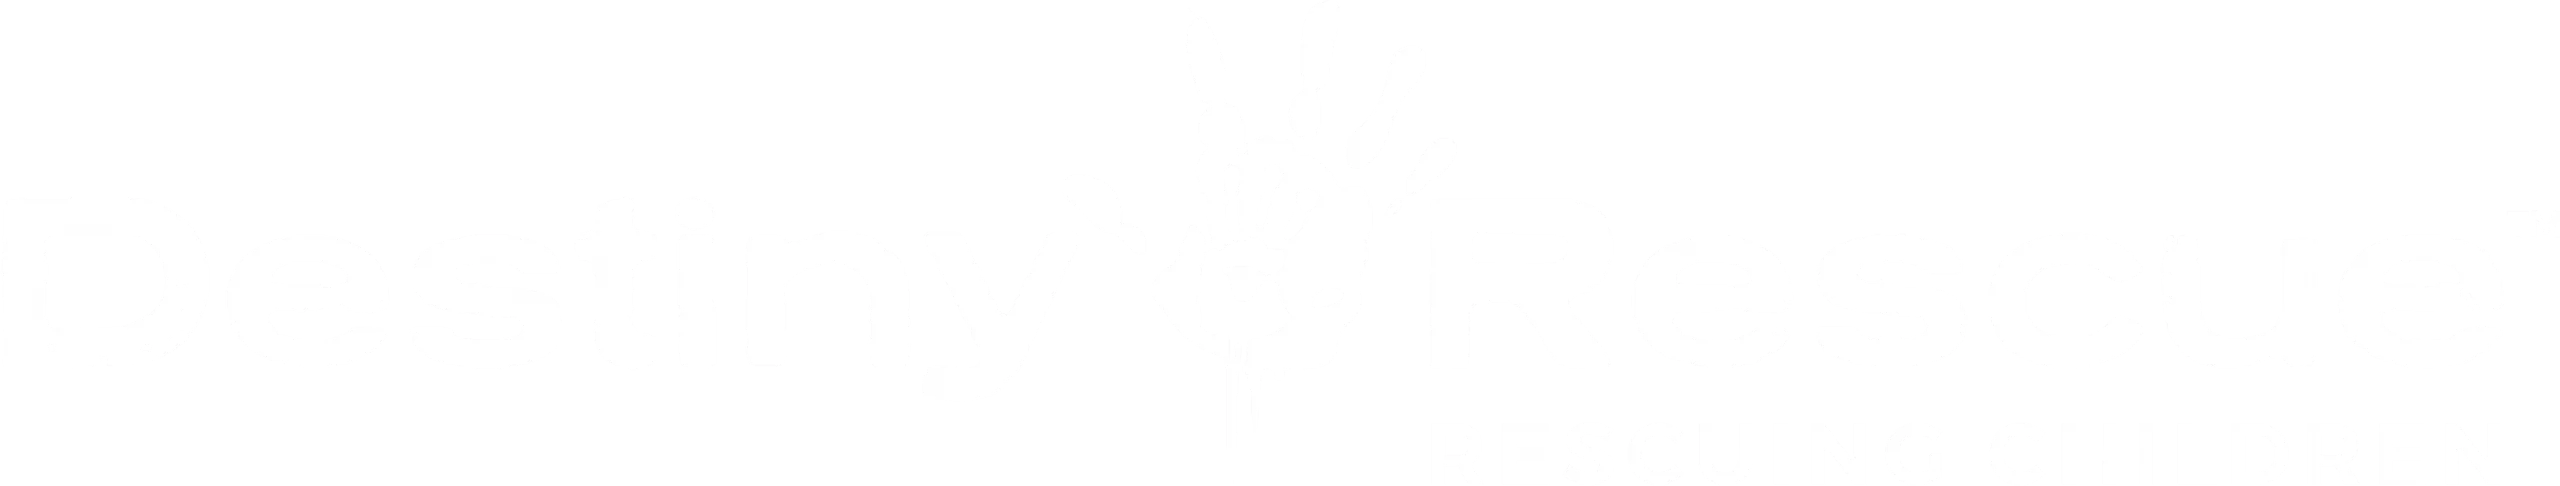 Destiny Rescue Logo white